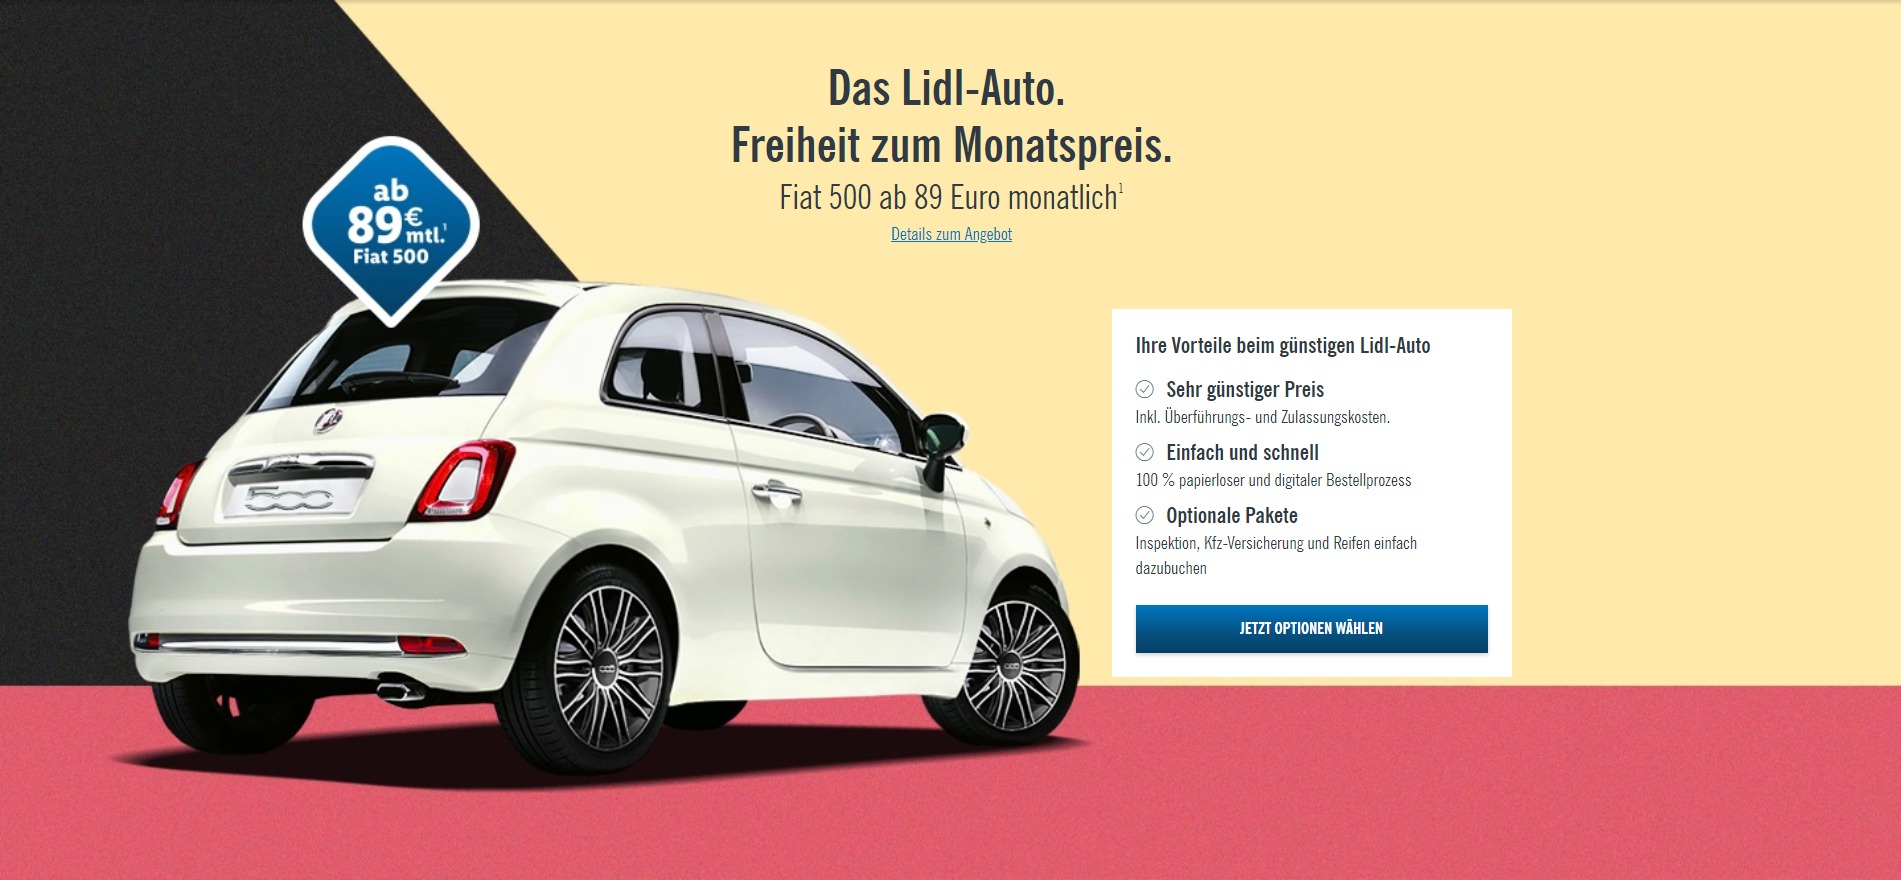 Lidl Auto Monatspreis Fiat